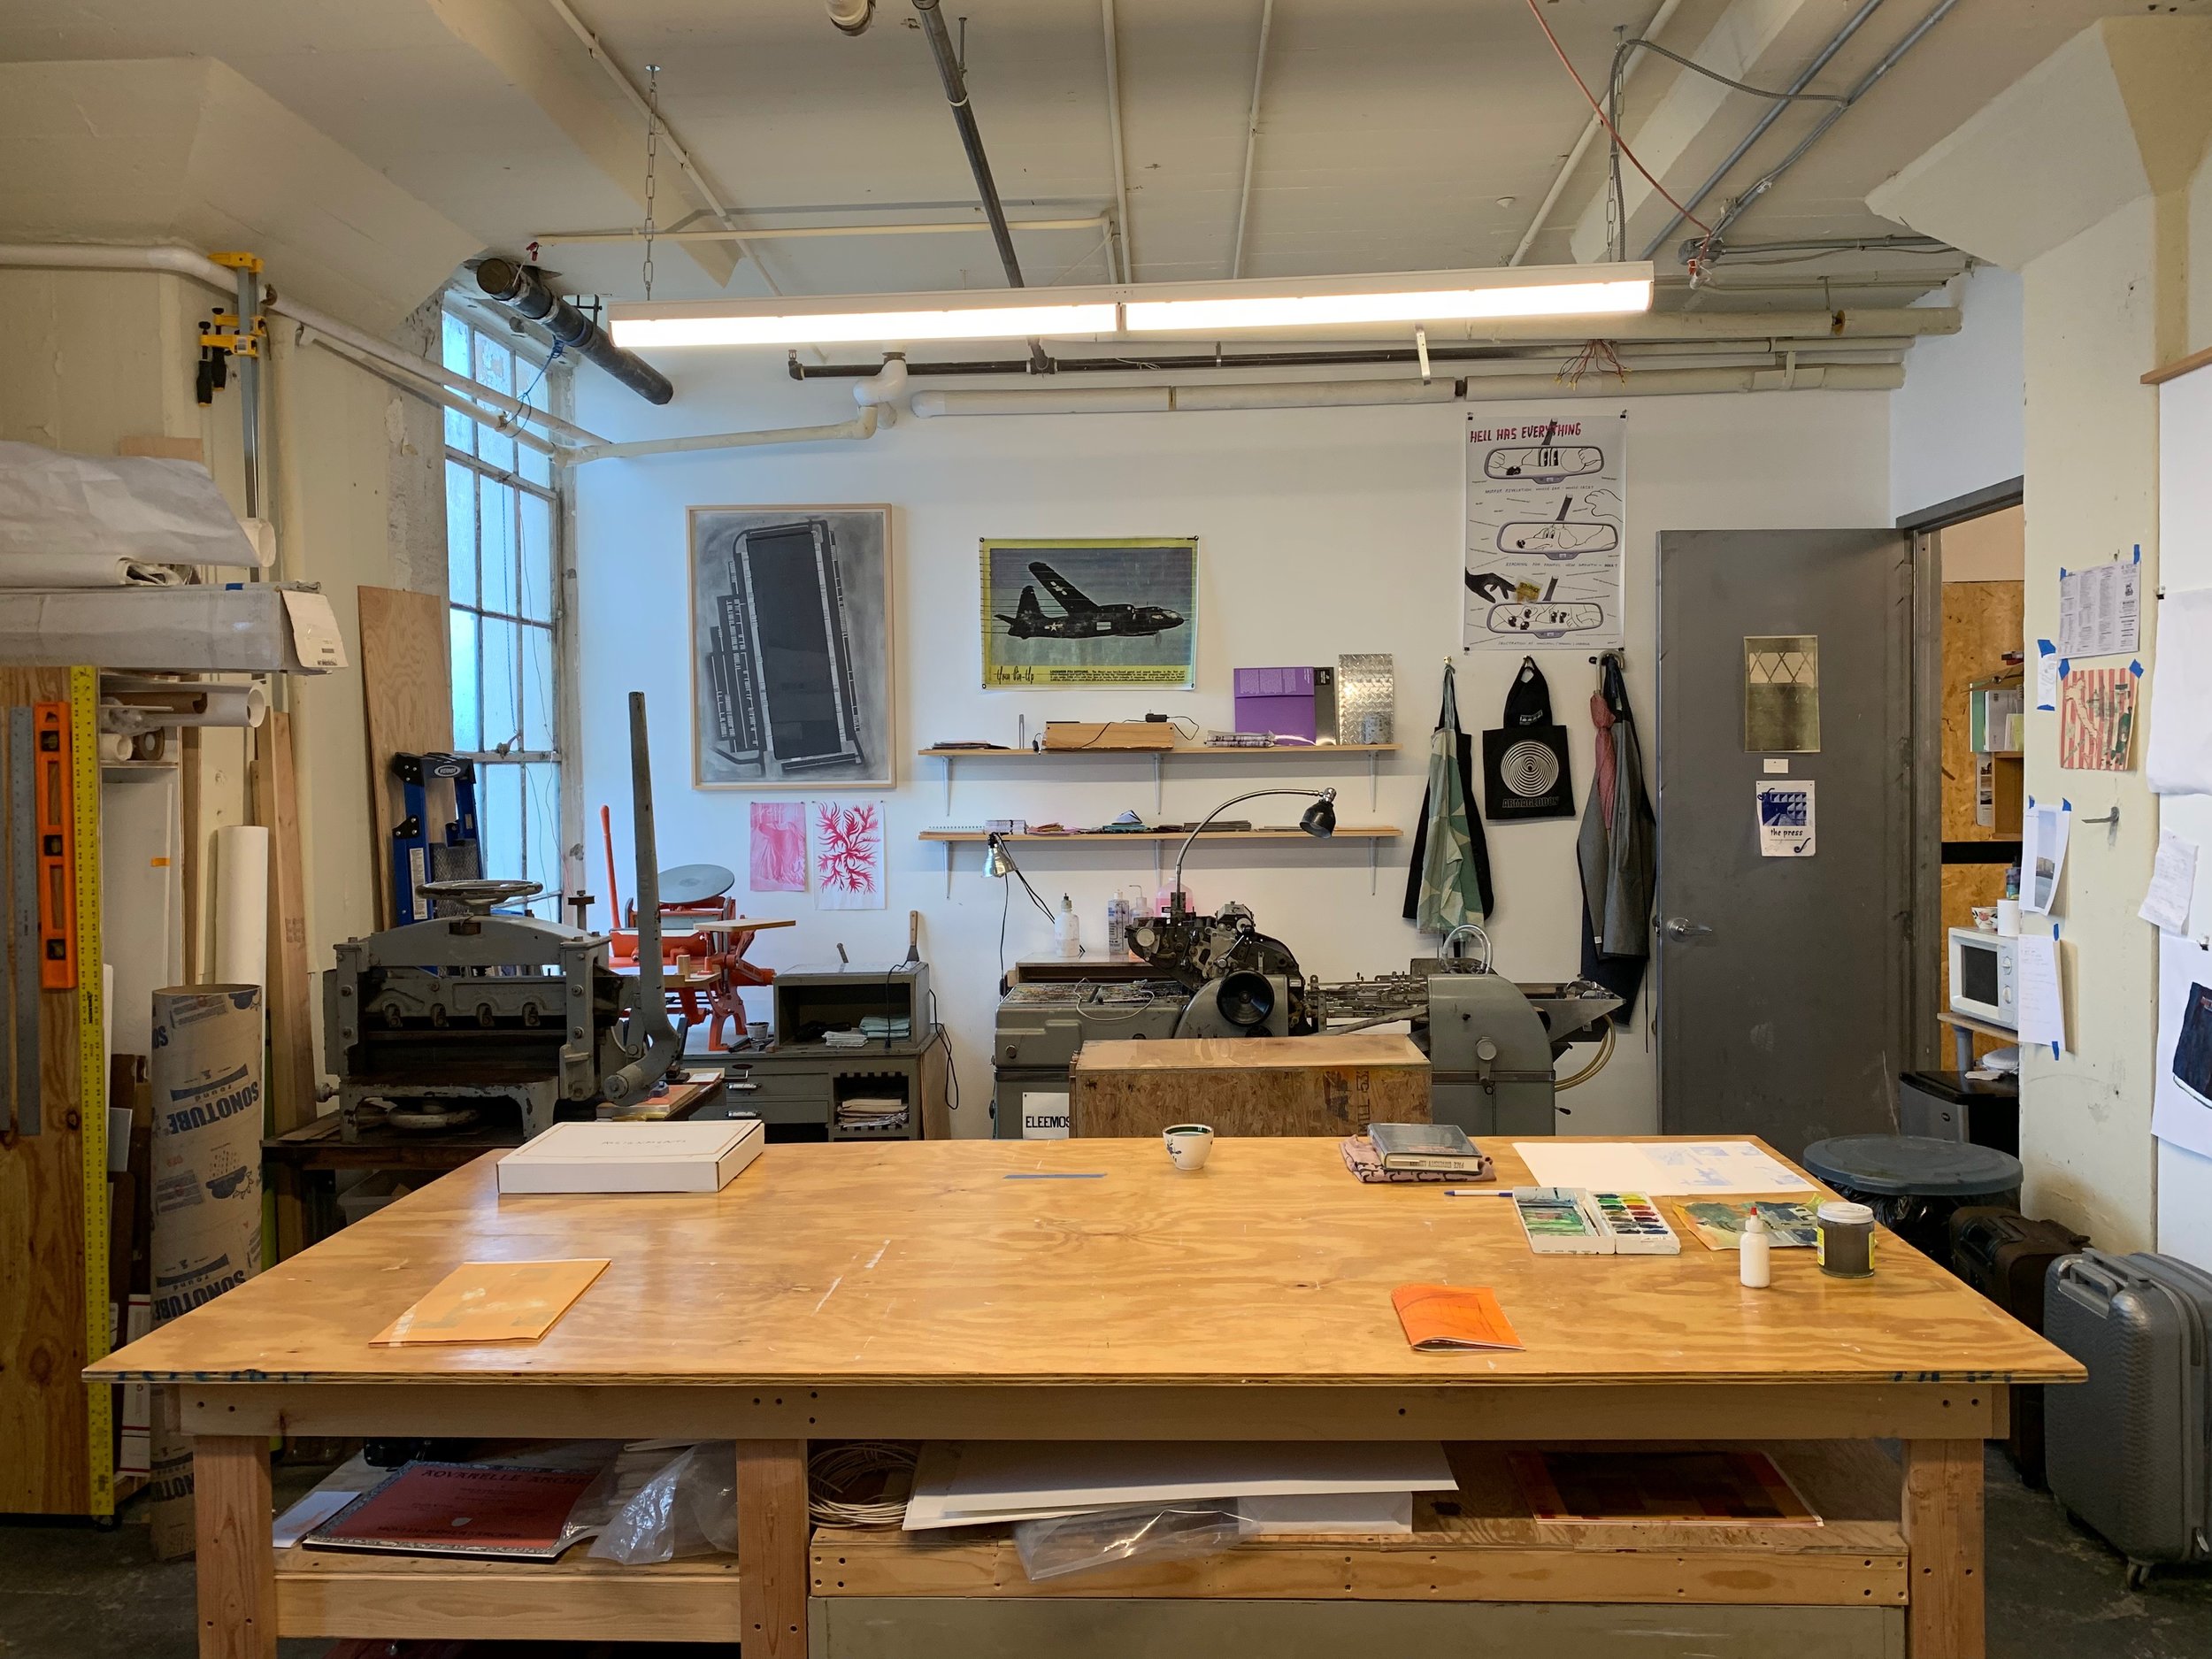 Ali's studio, "The Press", in Brooklyn. 